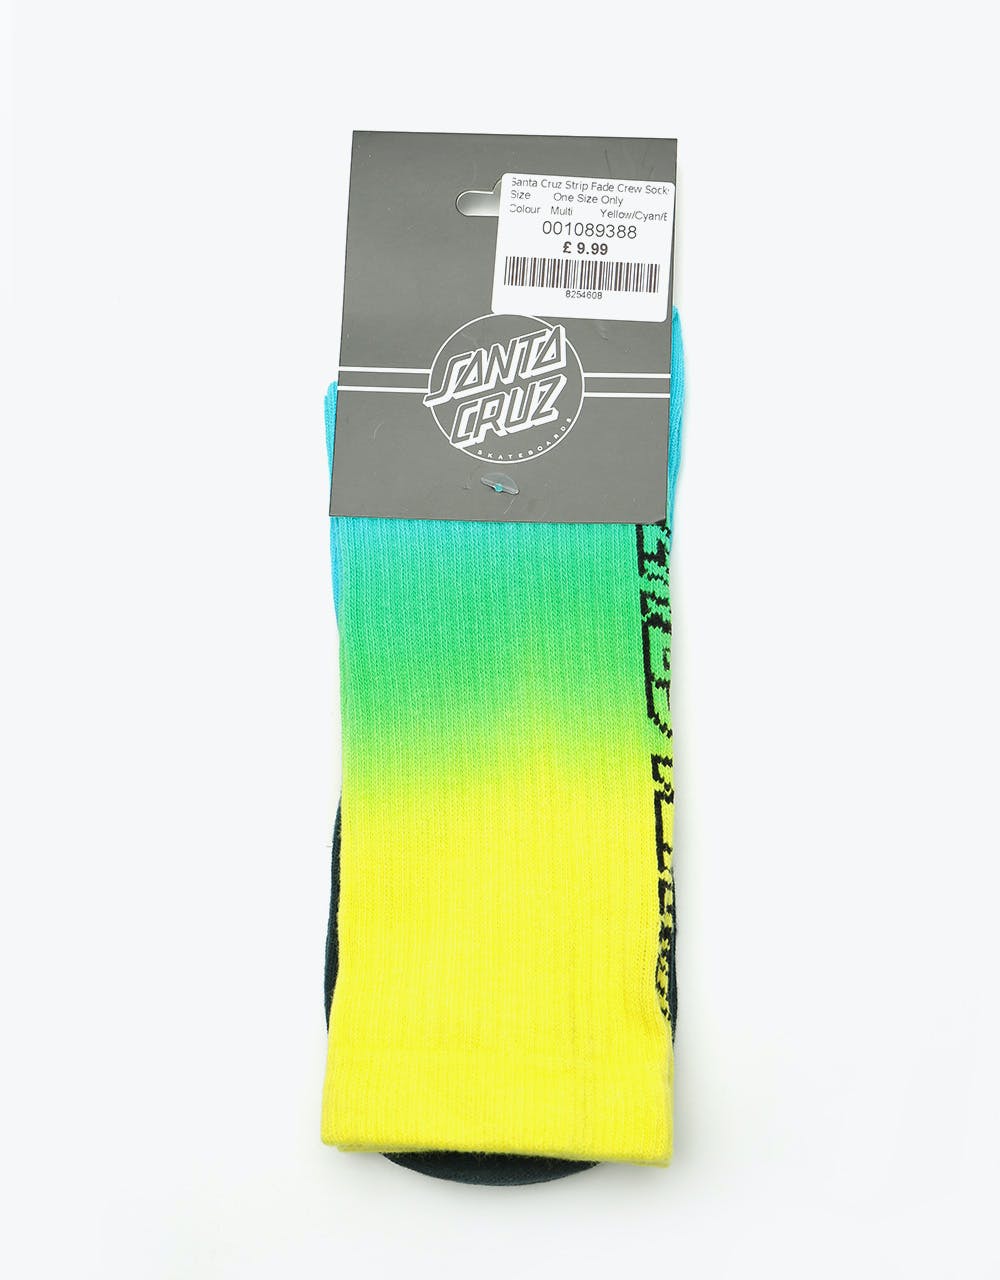 Santa Cruz Strip Fade Crew Socks - Yellow/Cyan/Black